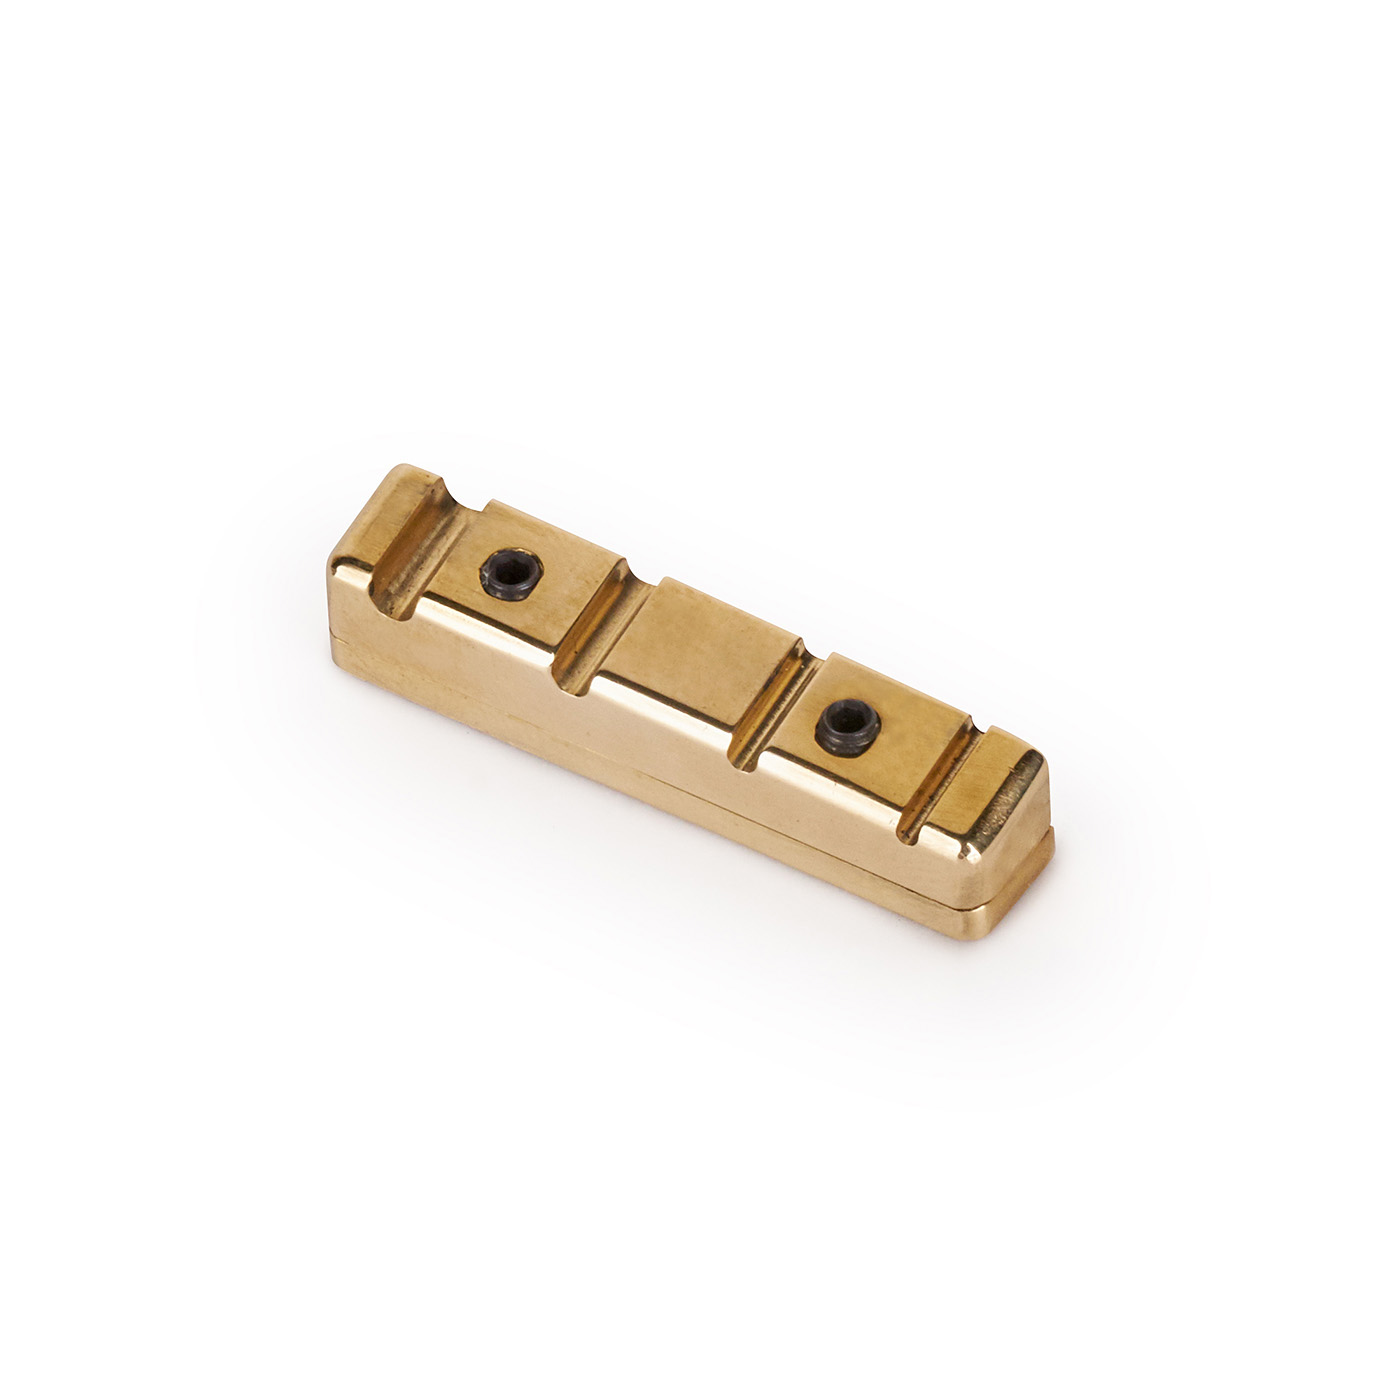 Warwick Parts - Just-A-Nut III, 4-String, Lefthand, 36.5 mm width - Brass